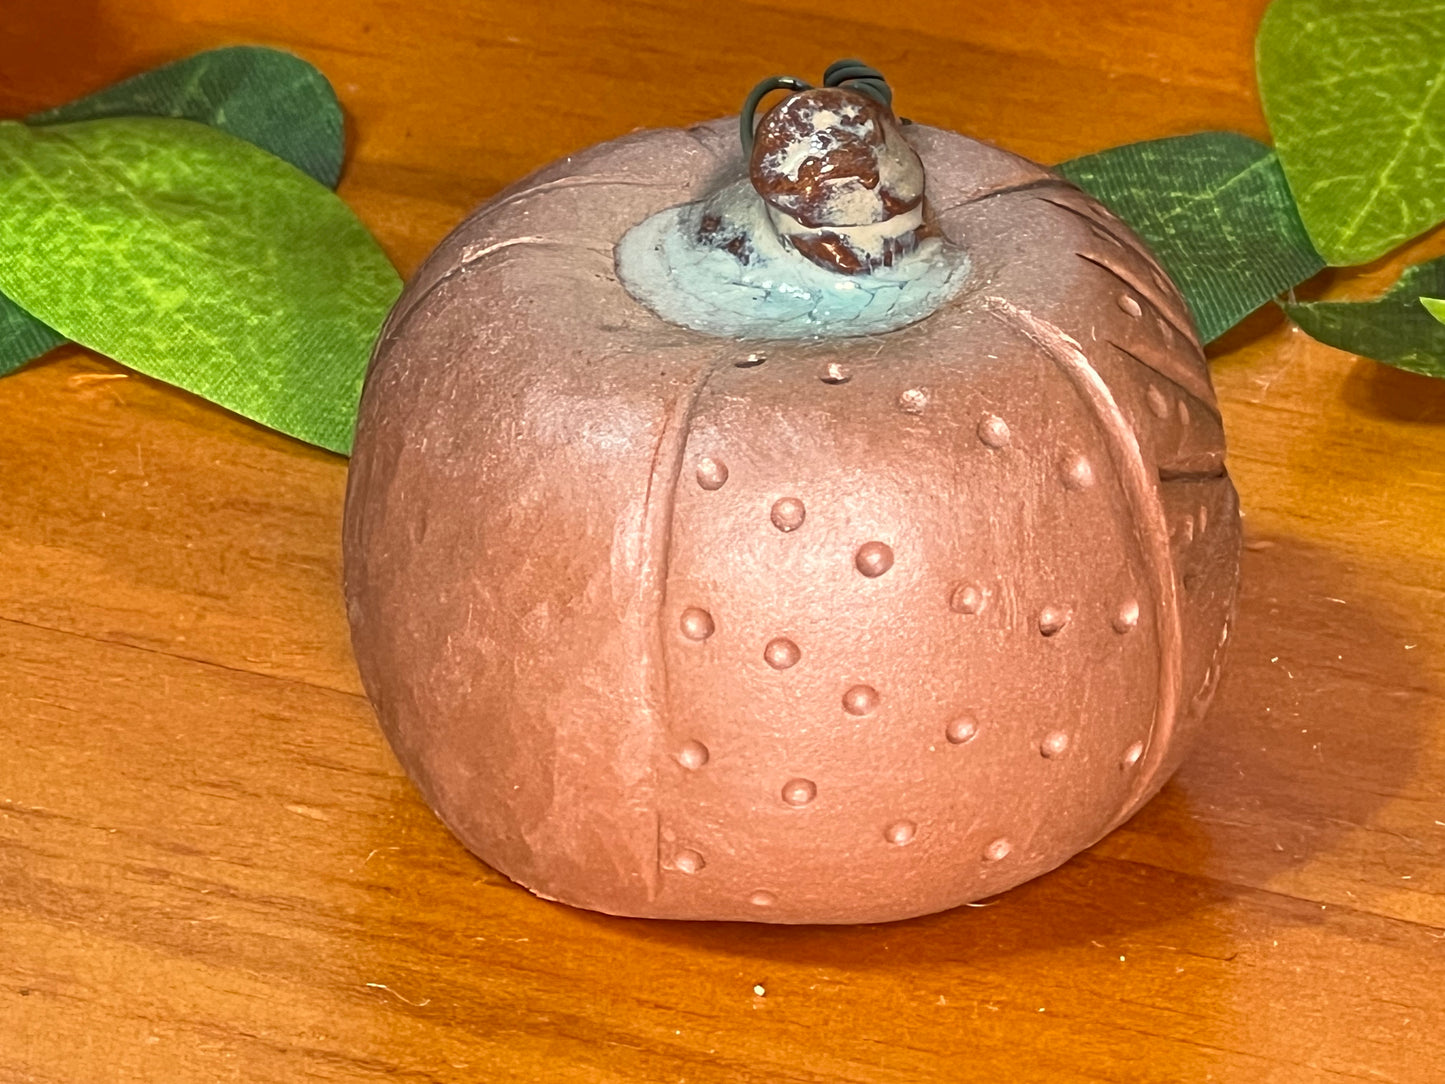 Decorated Pumpkin 2